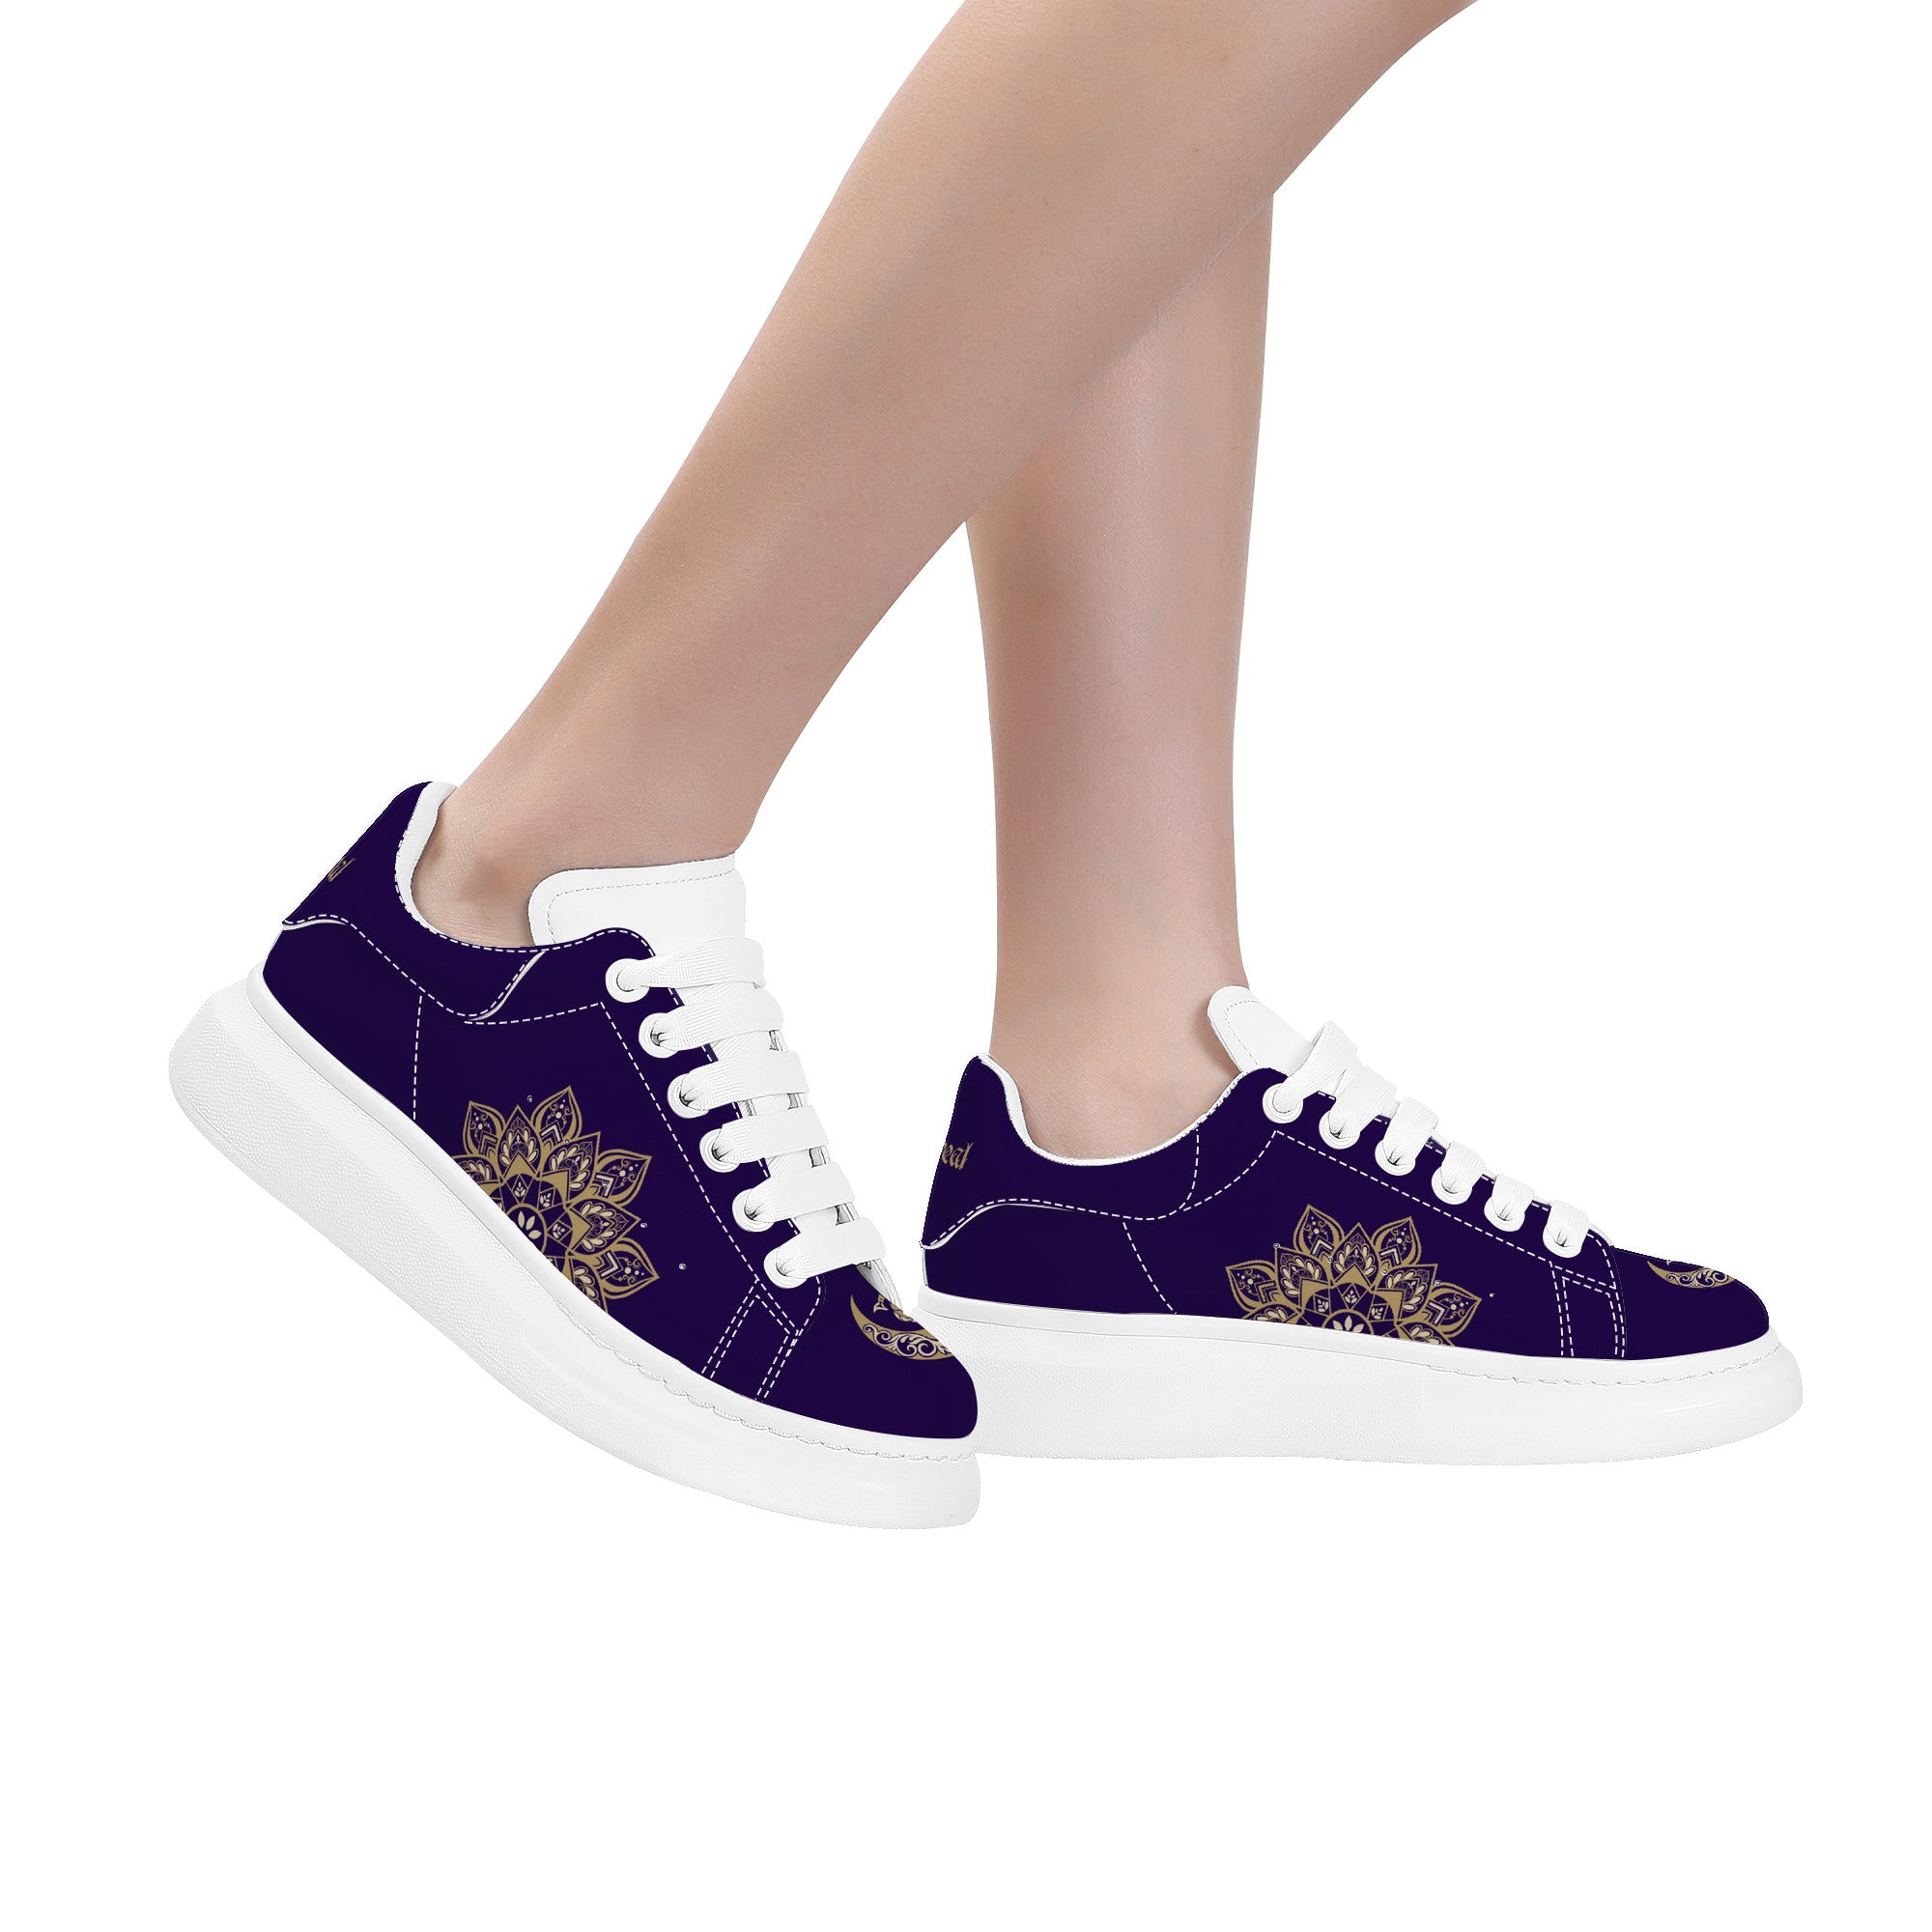 Cool shoes by Llayda W | Low Top Customized | Shoe Zero